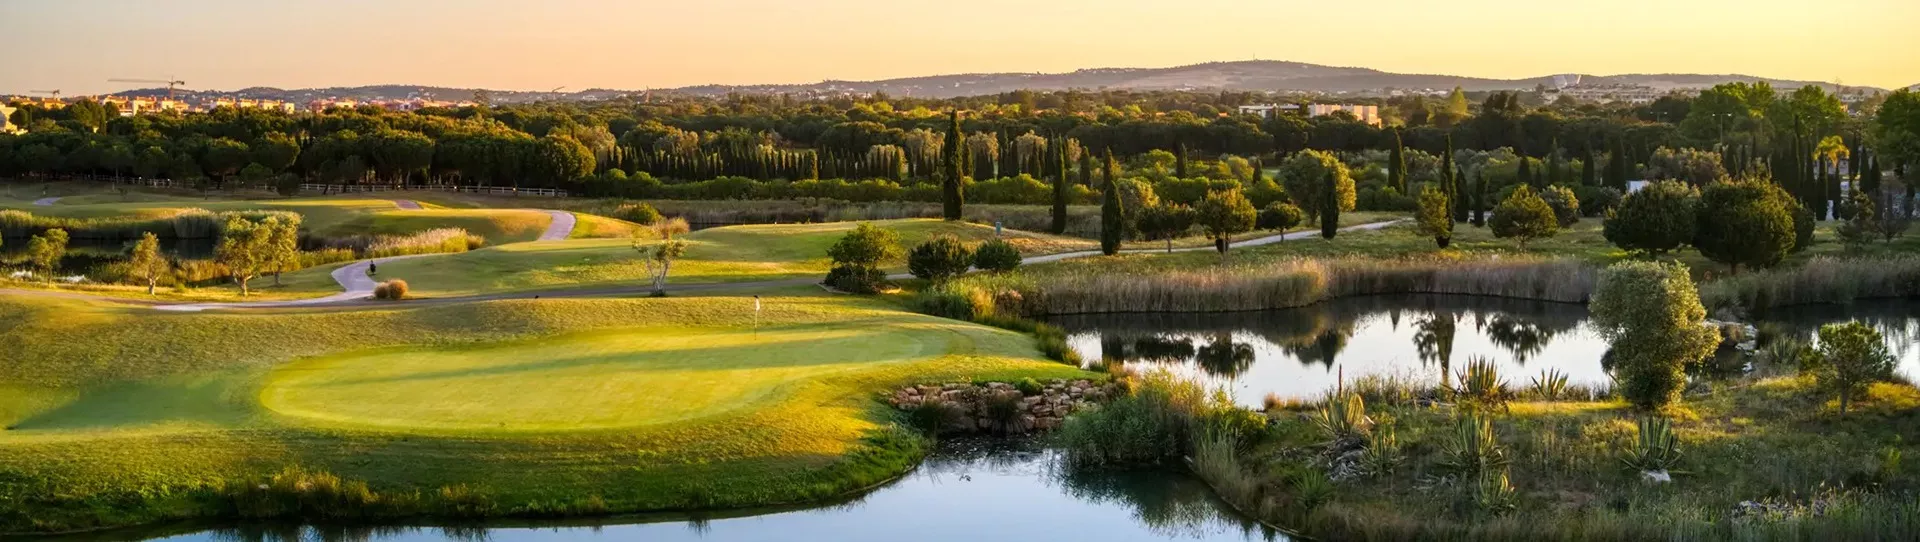 Portugal golf courses - Vilamoura Victoria Golf Course - Photo 1